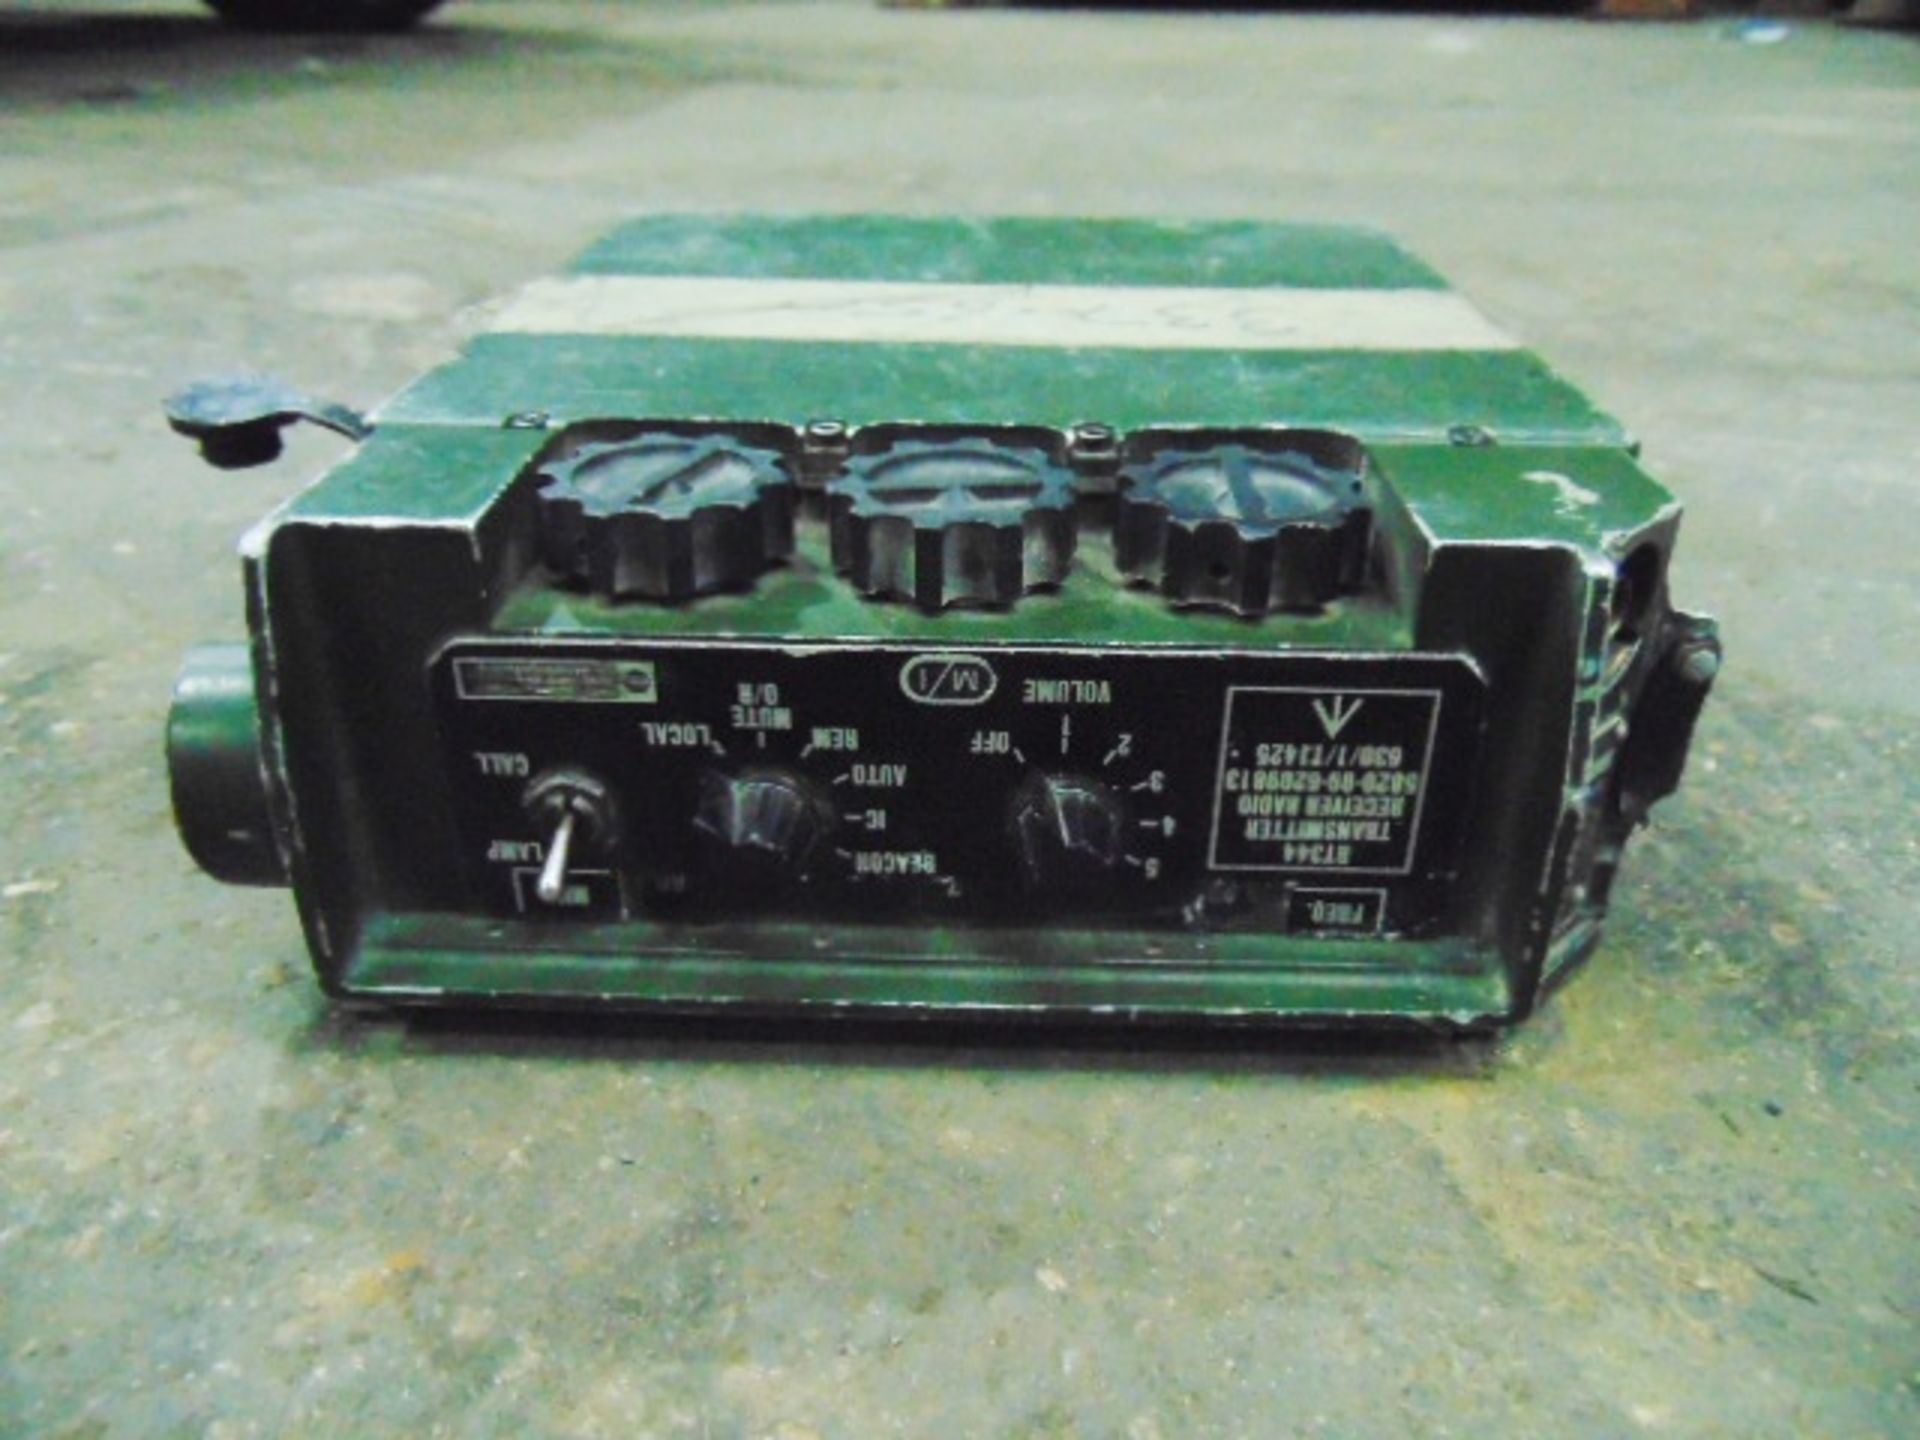 Very Rare SAS Clansman RT-344 / PRC-344 UHF Man-pack Transceiver - Image 4 of 5